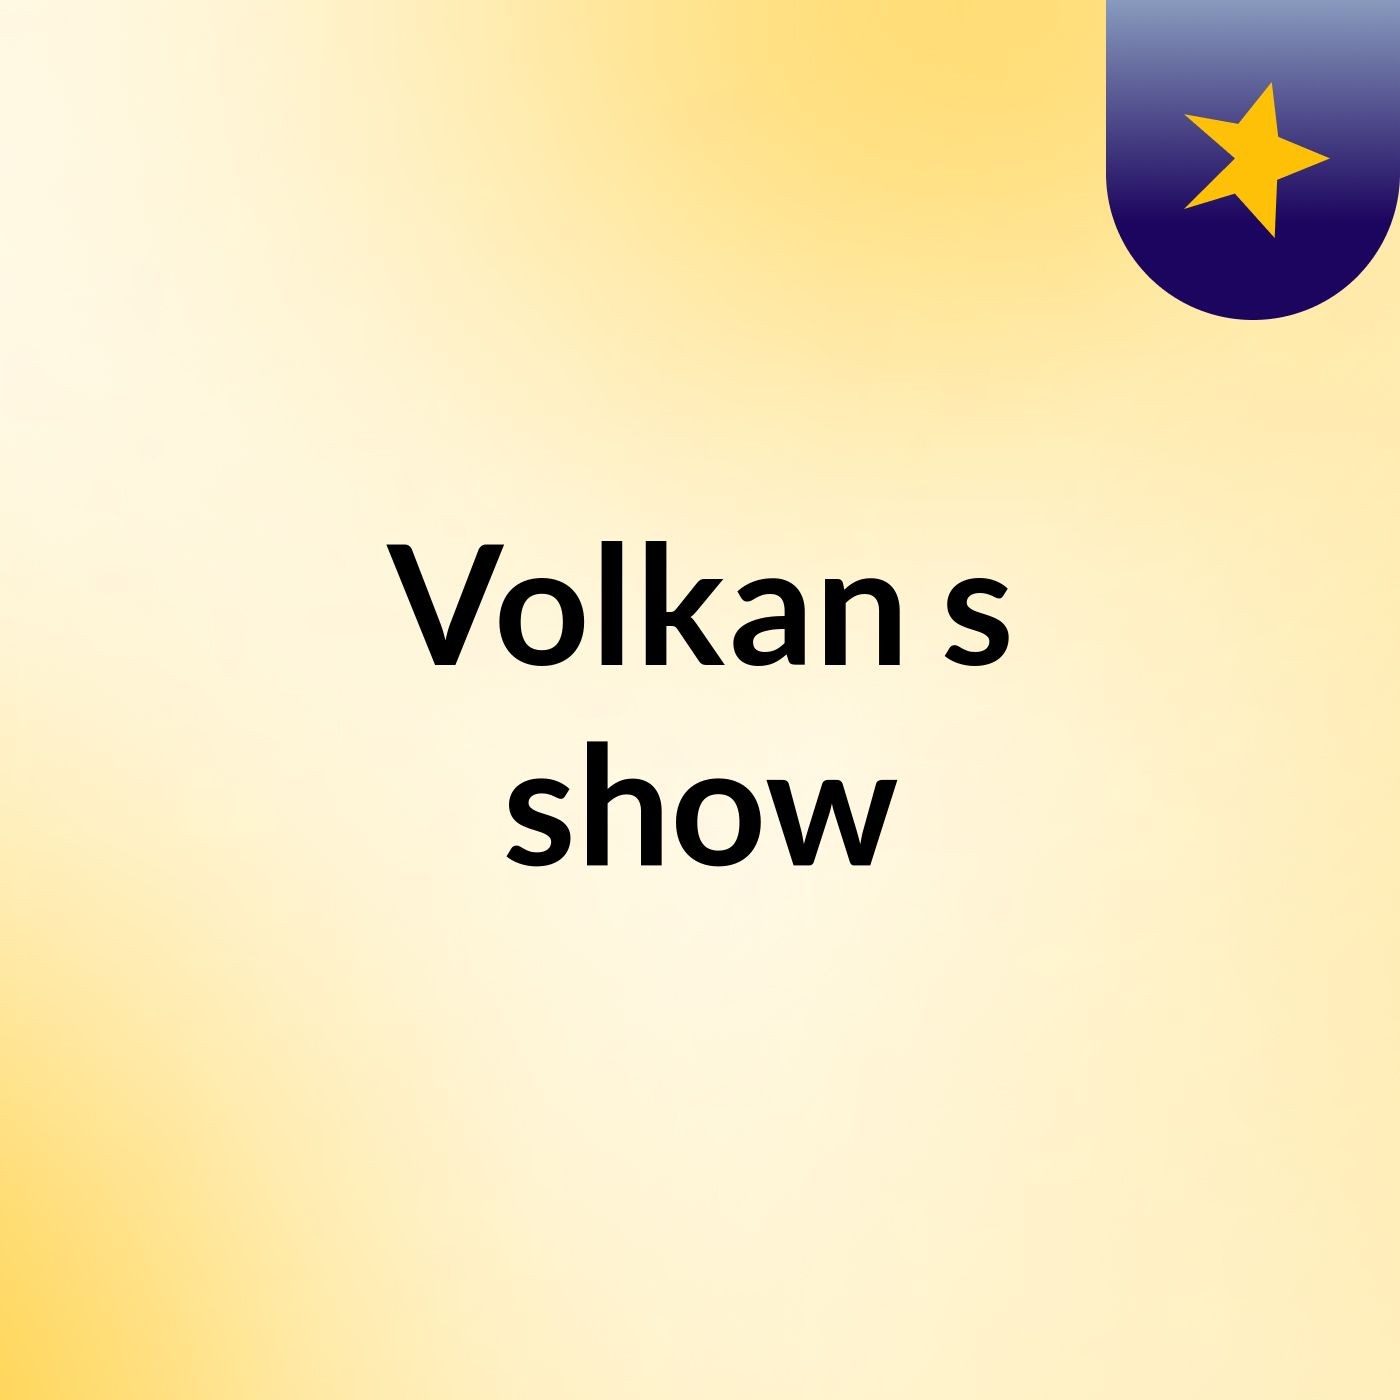 Volkan's show